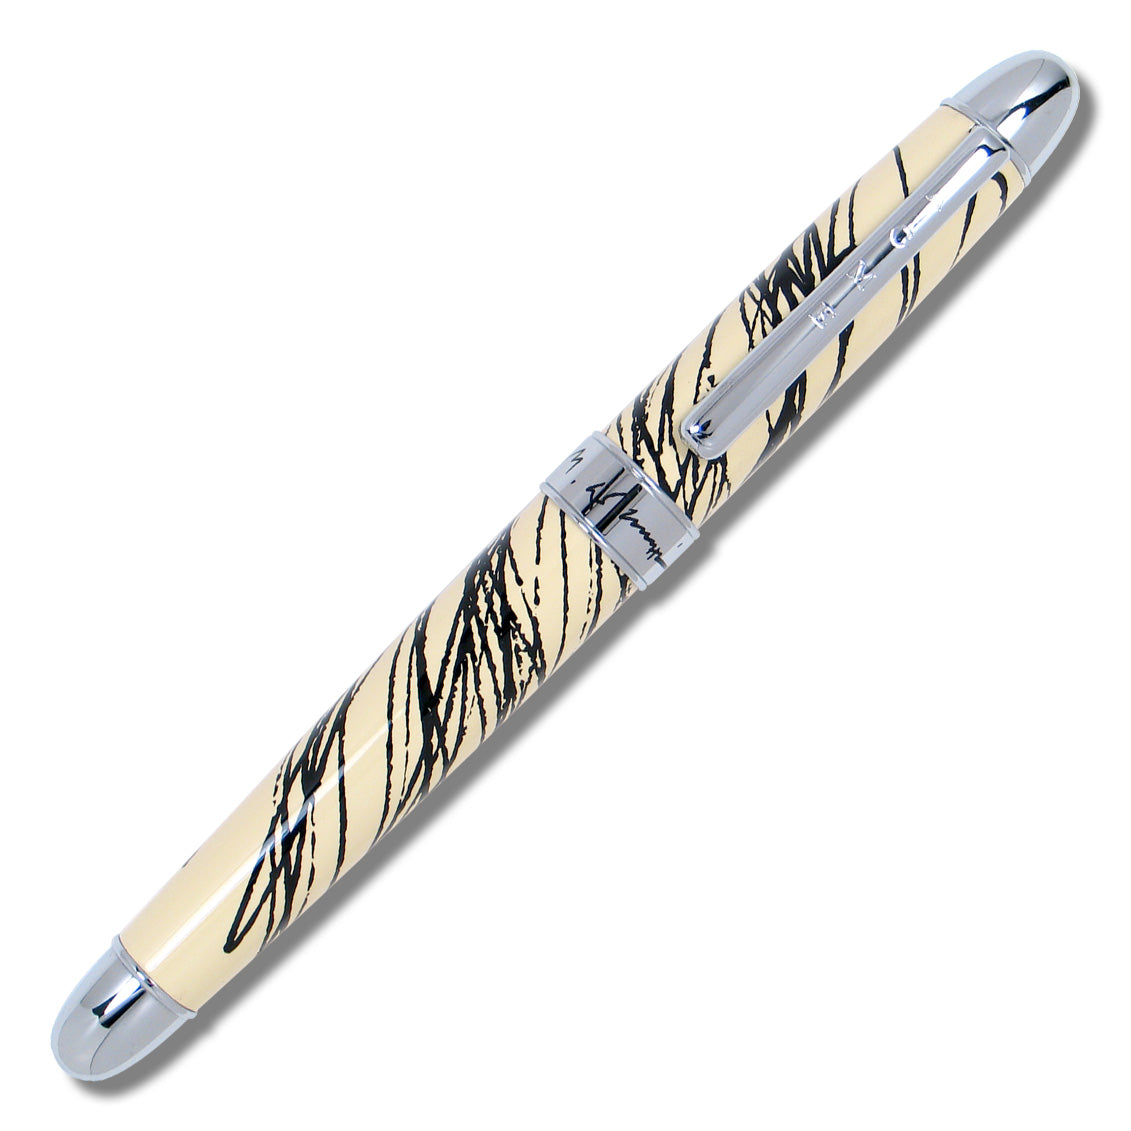 ACME Studio “Scrawls Creme” Rollerball Pen by MEMPHIS Designer M. DE LUCCHI New